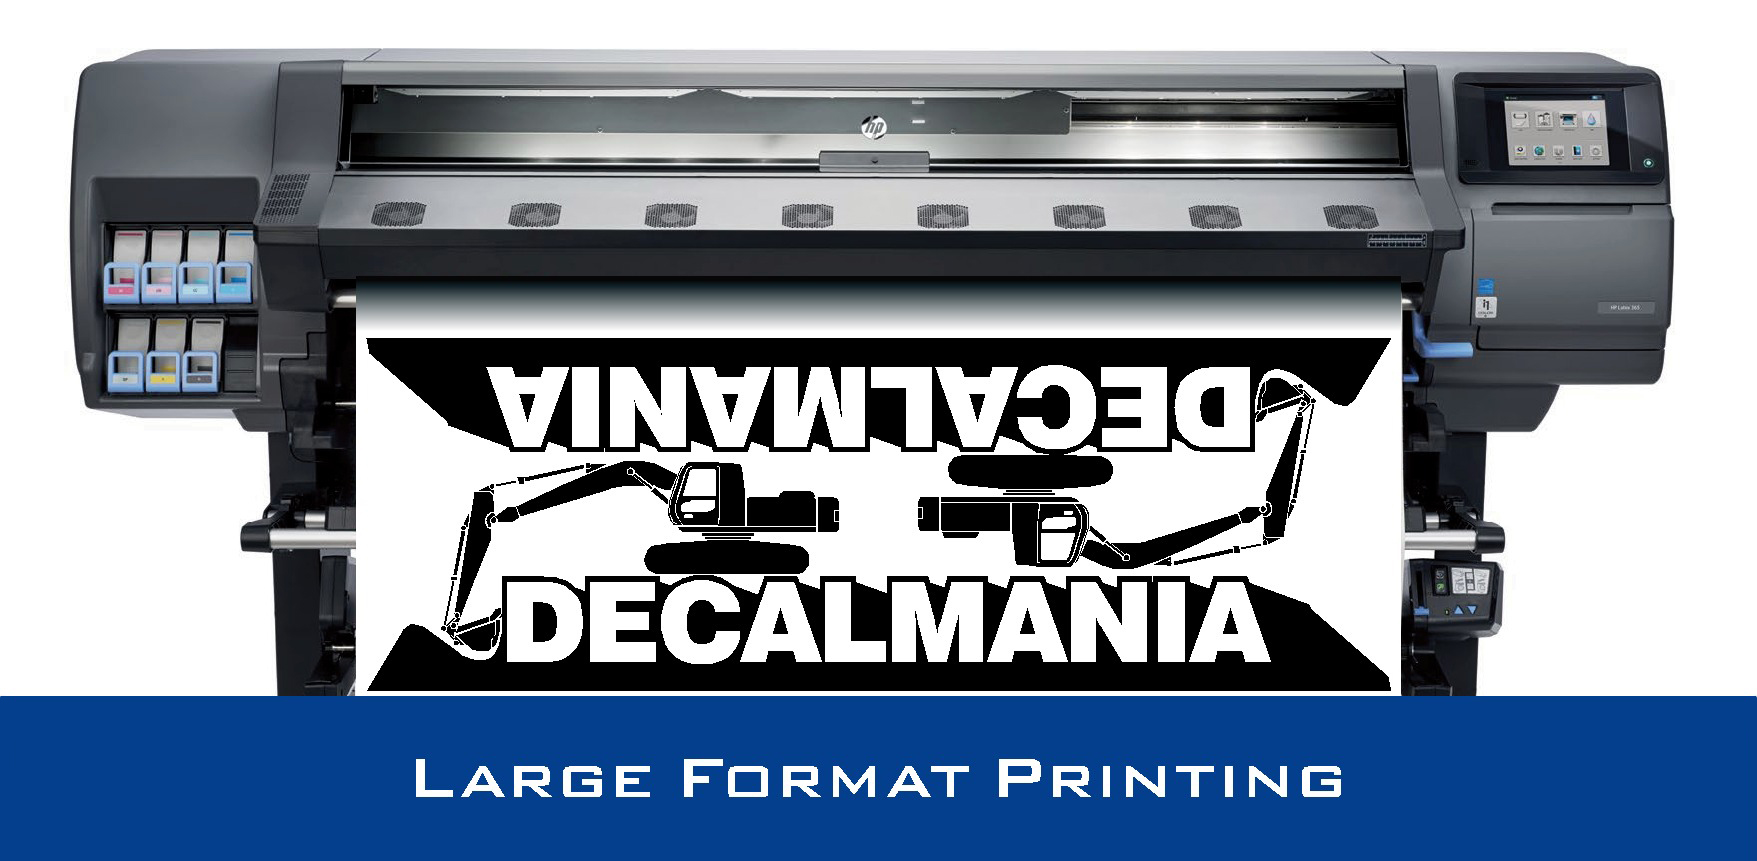 Large Format Vinyl Printer for decals